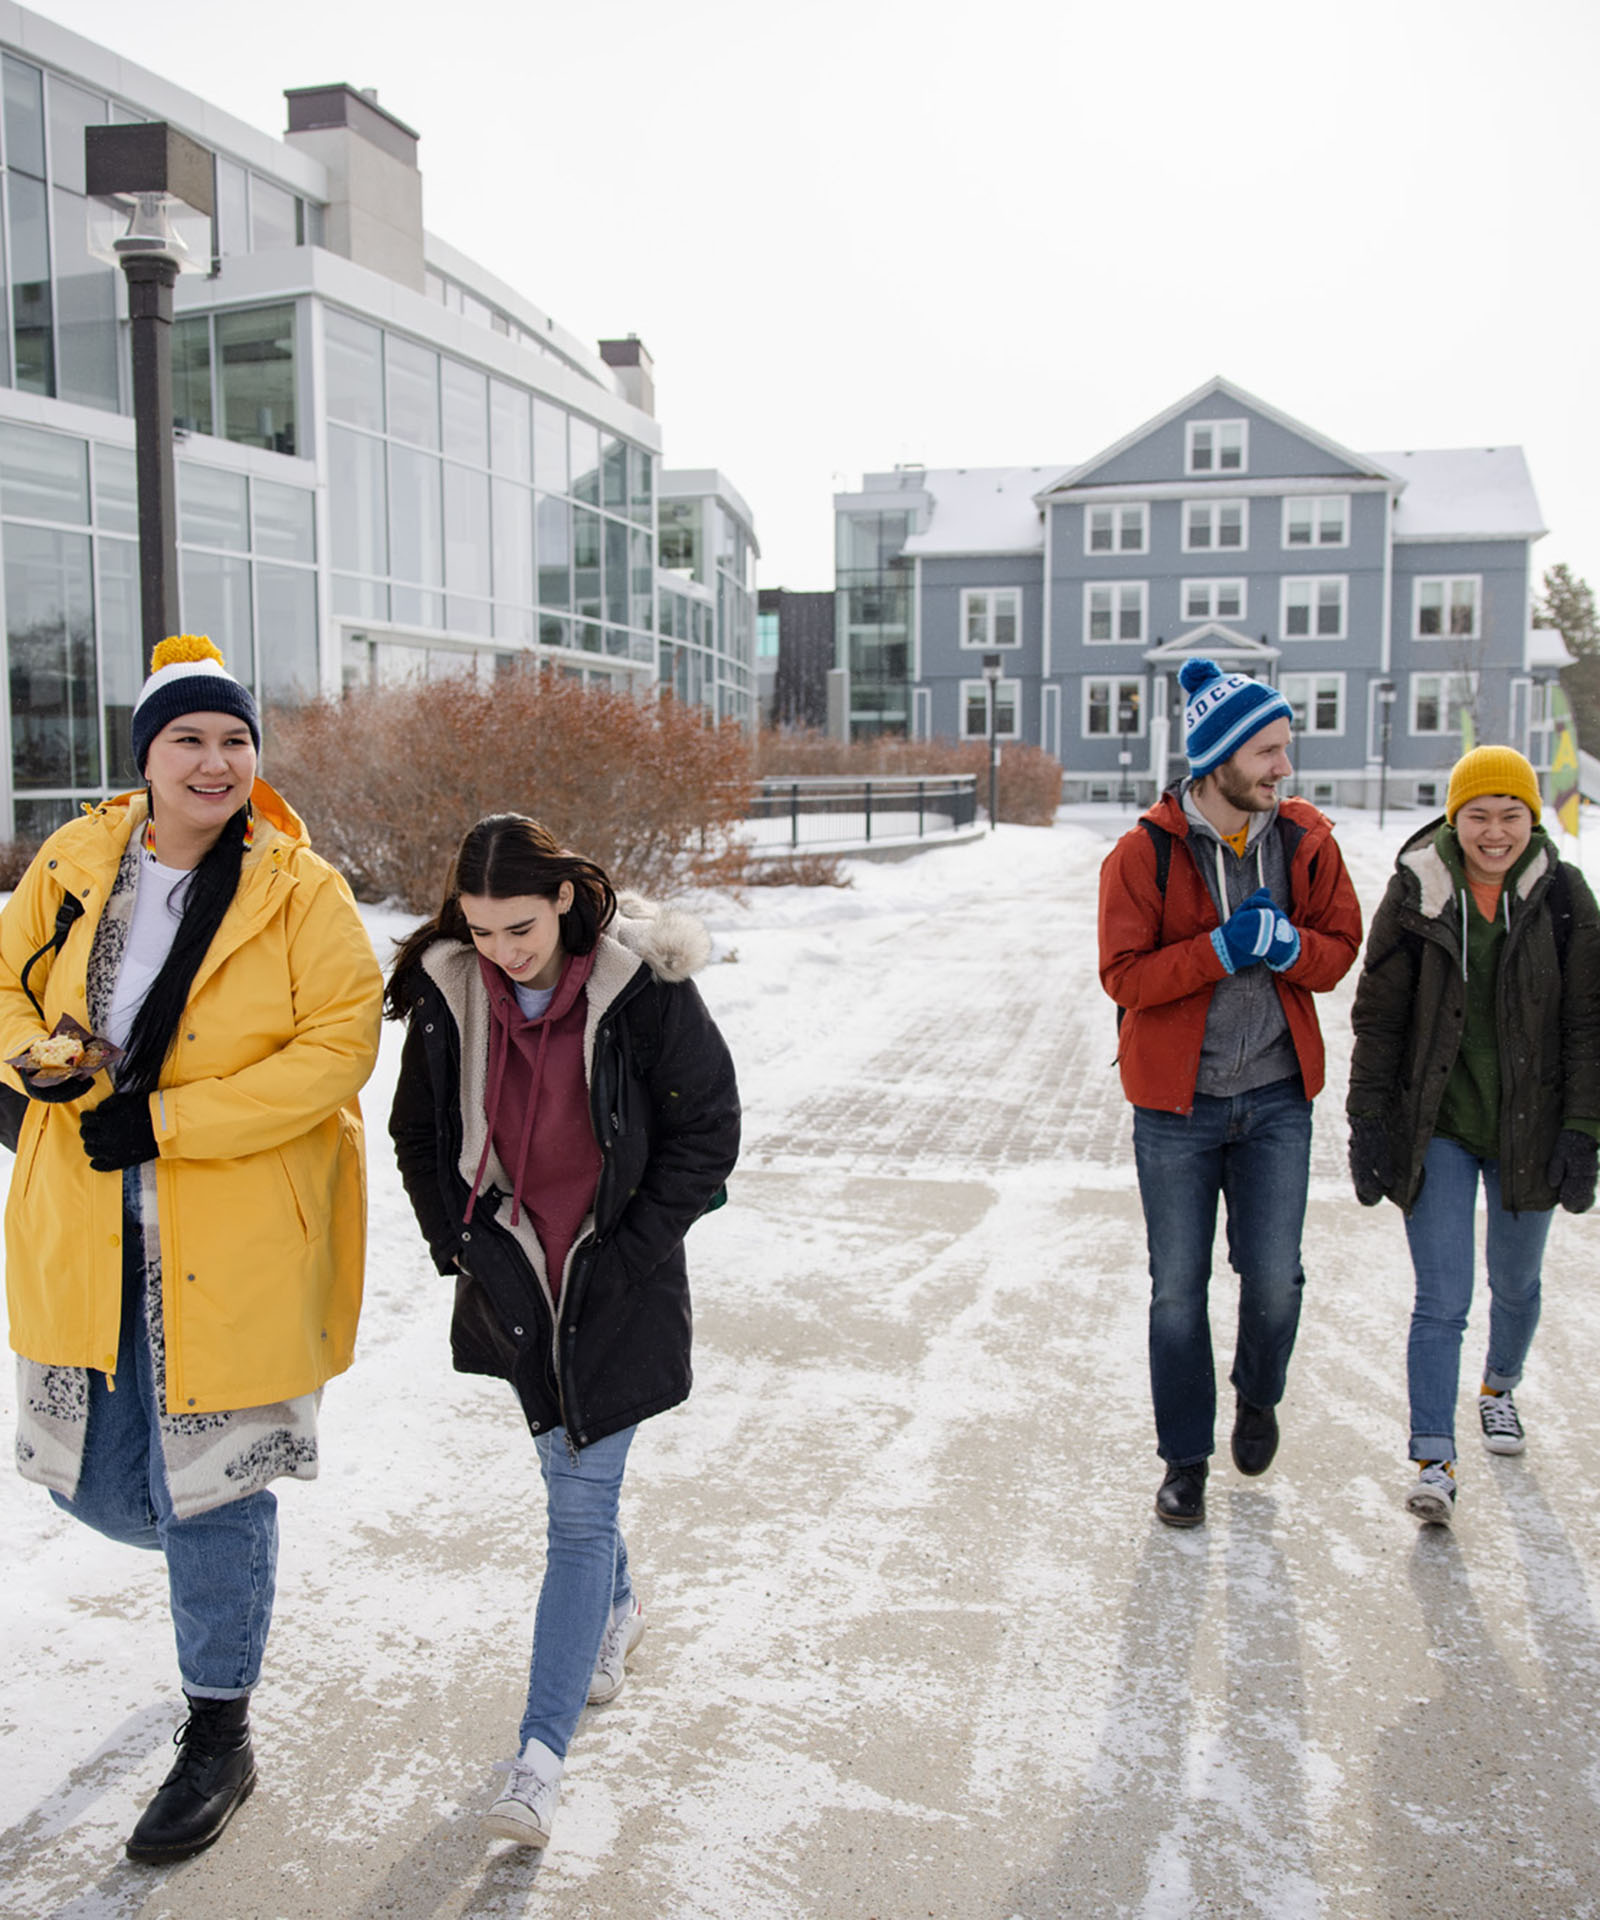 Peaople walking on campus in the winter